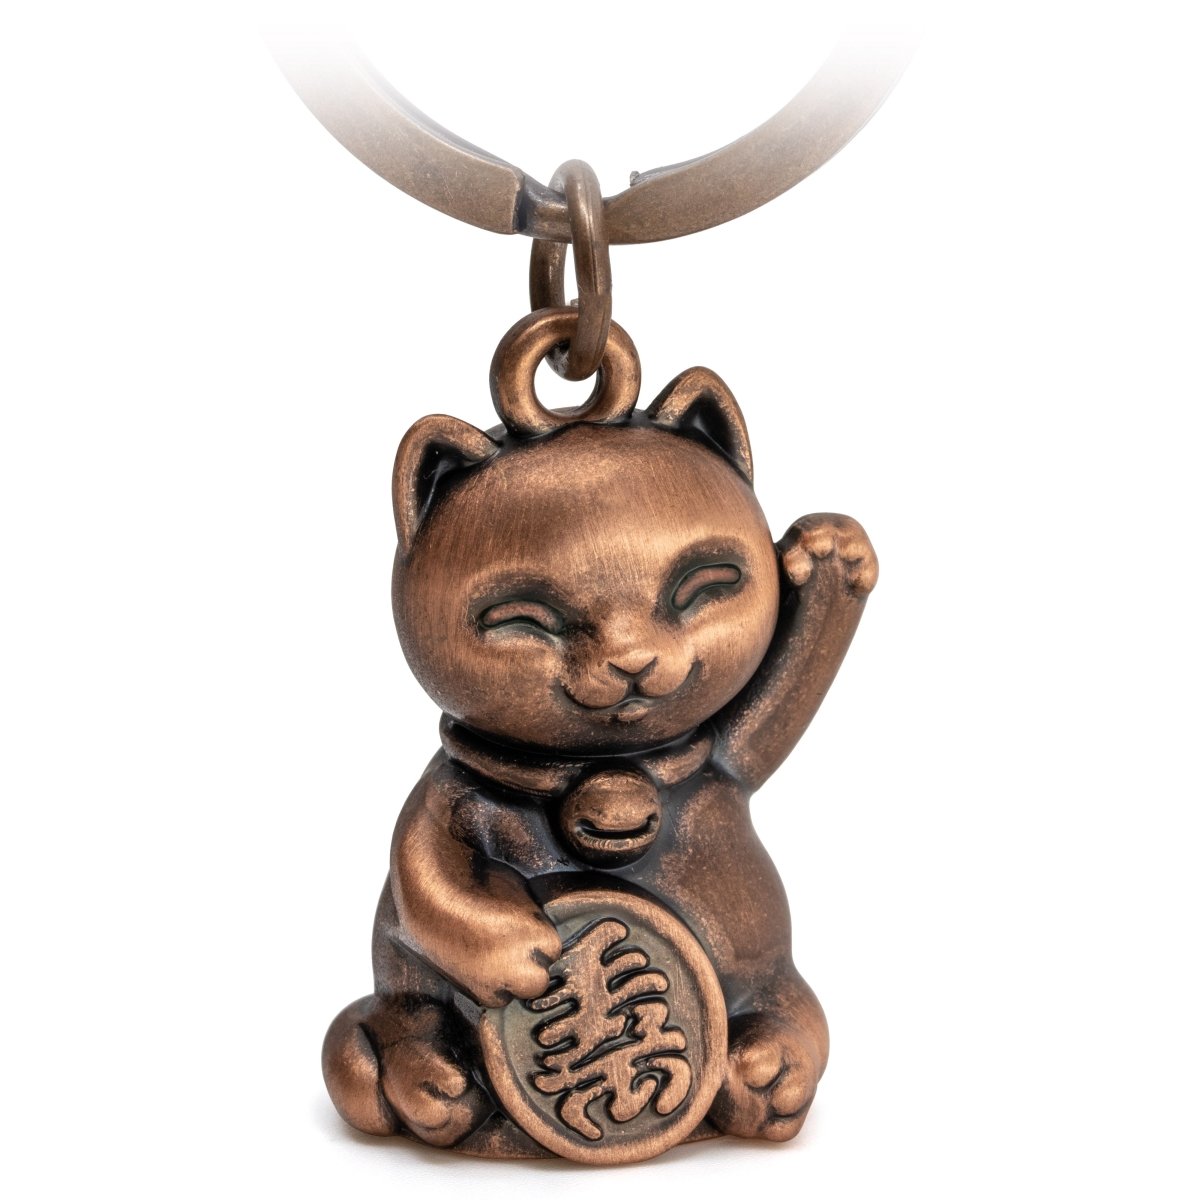 Glückskatze Winkekatze Schlüsselanhänger "Maneki Neko" - Süßer Lucky Cat Katze Anhänger - Katze Glücksbringer